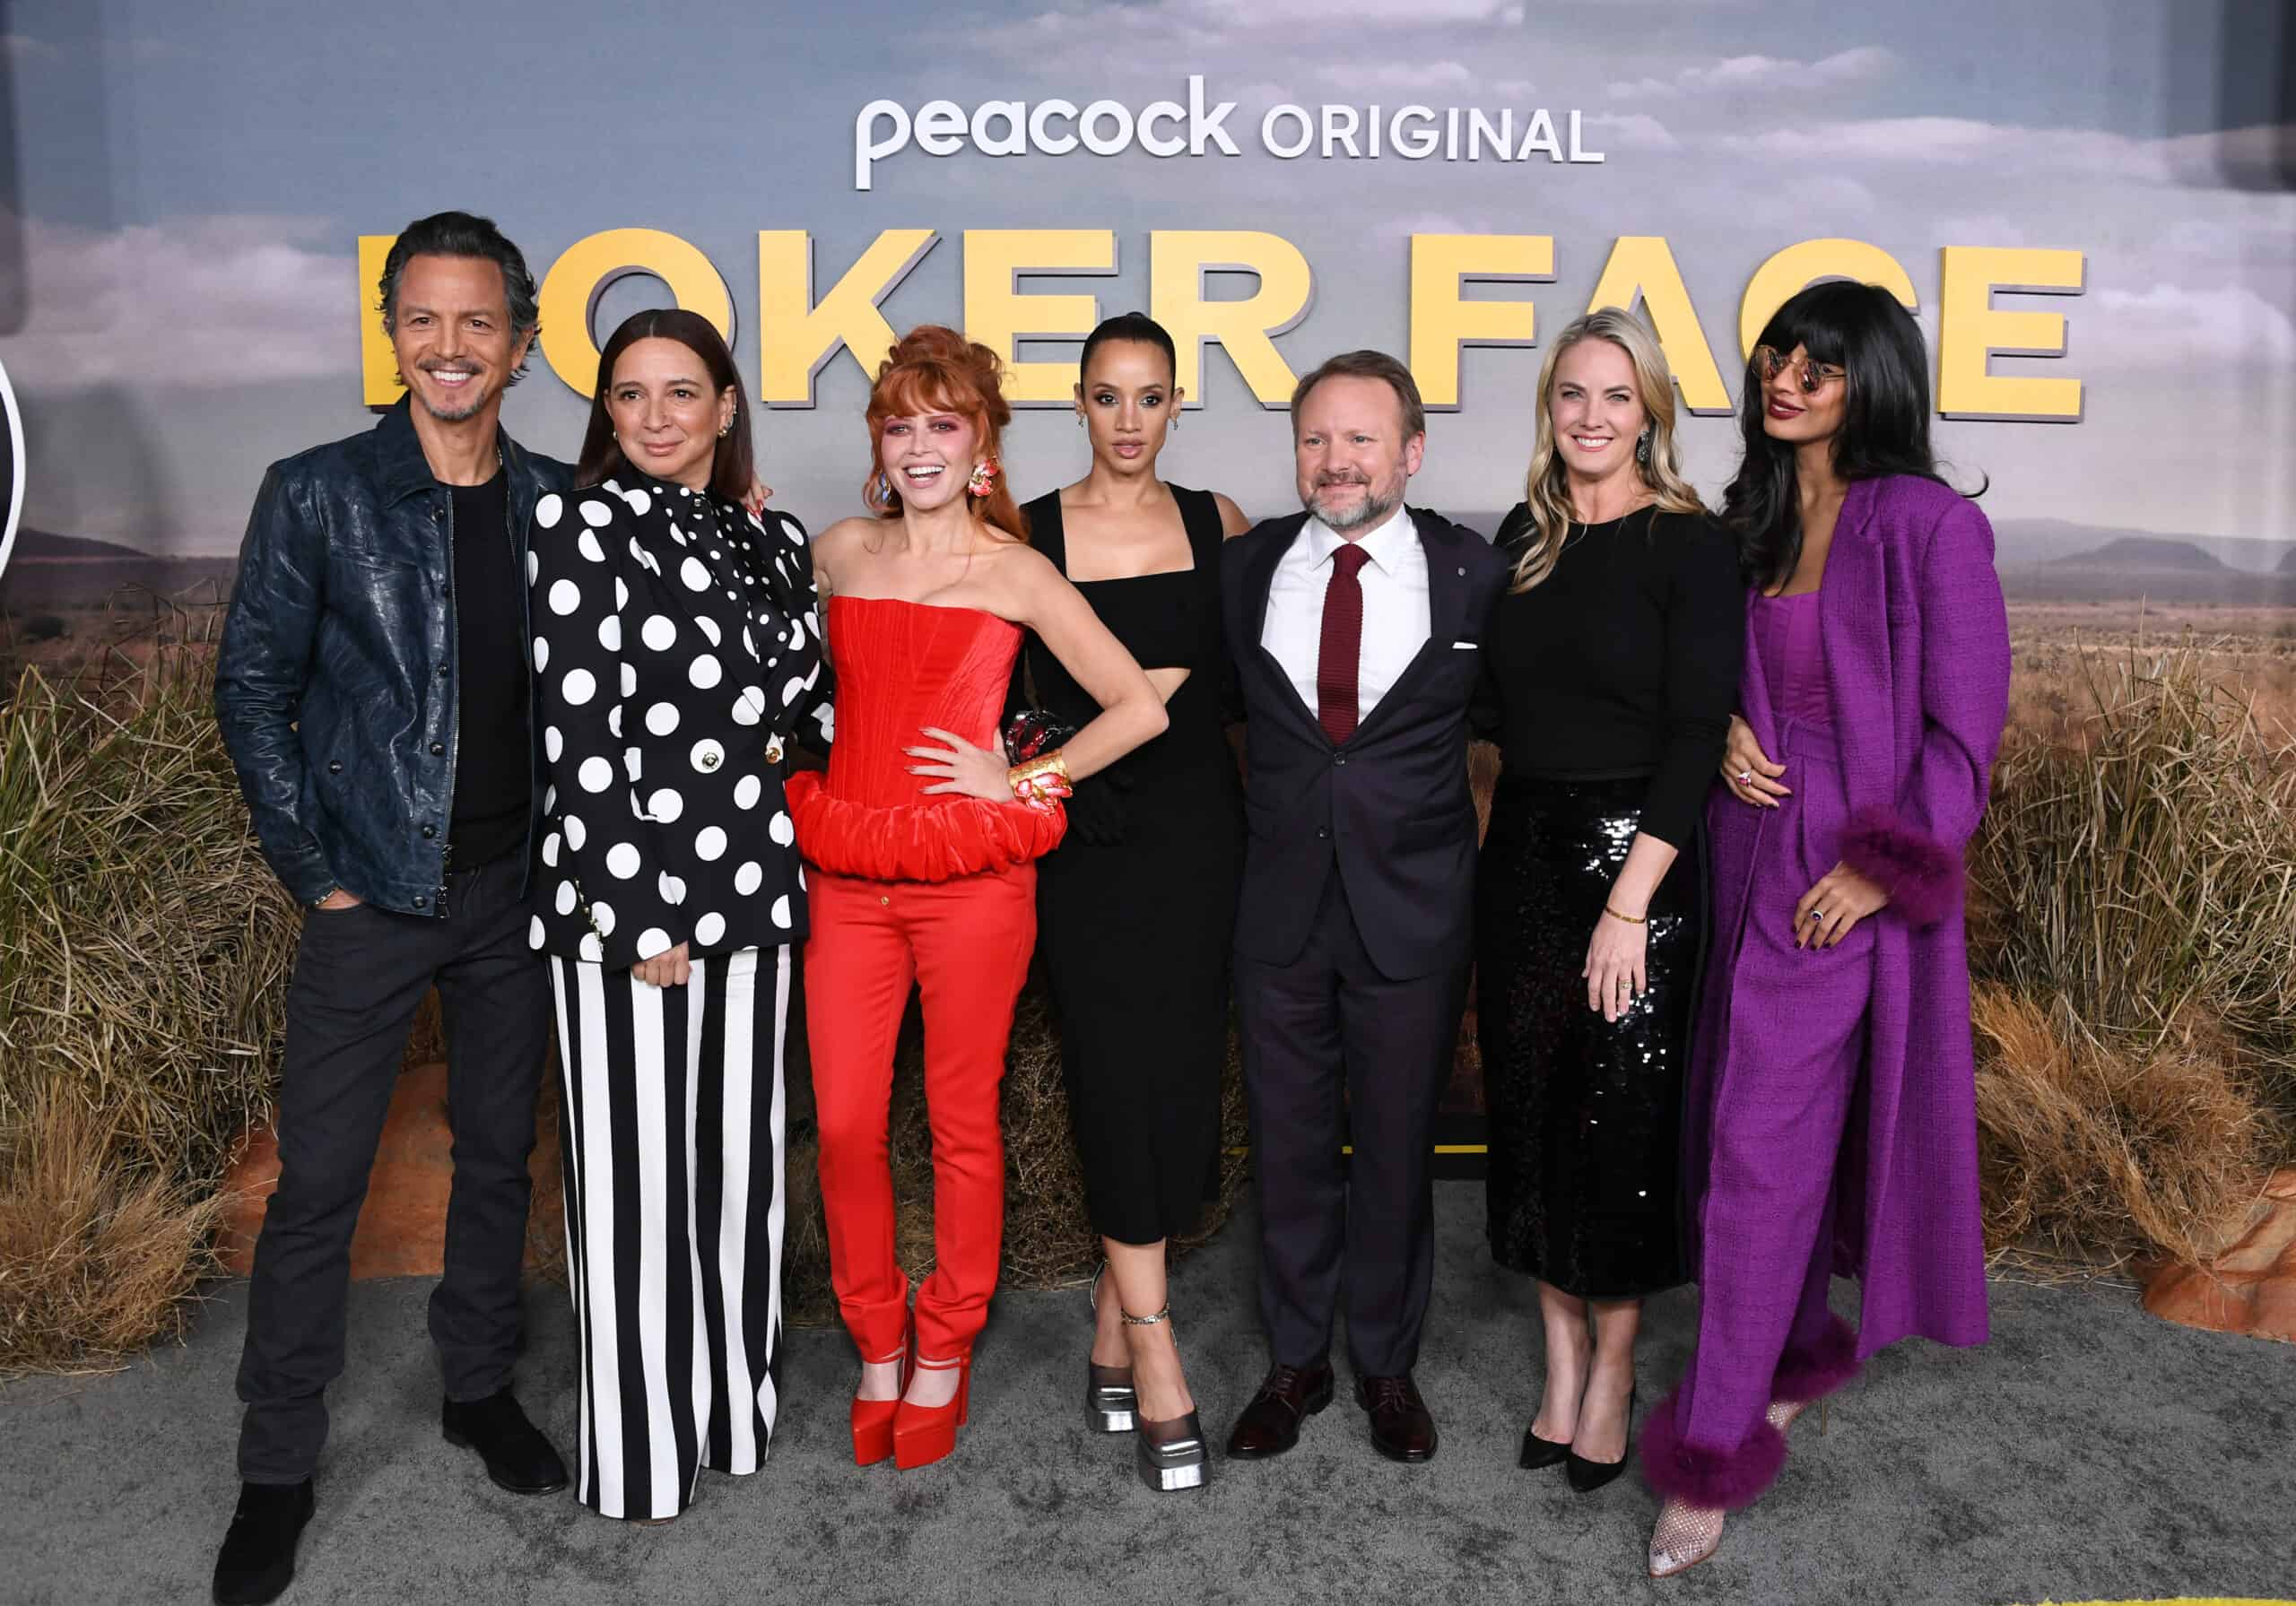 Los Angeles Premiere For Peacock Original Series "Poker Face" - Arrivals